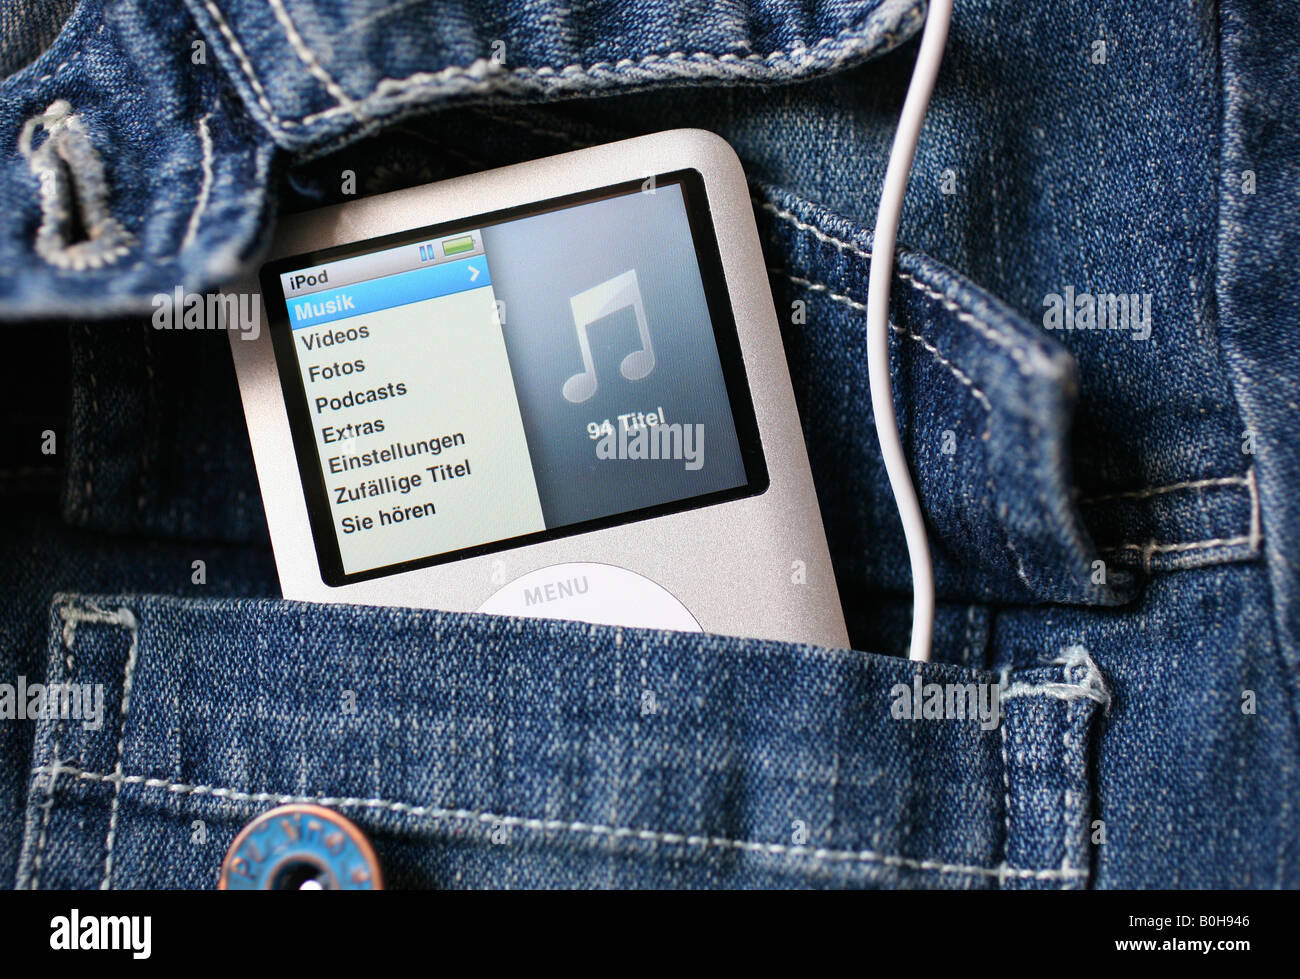 Apple iPod Nano in a jeans back pocket Stock Photo